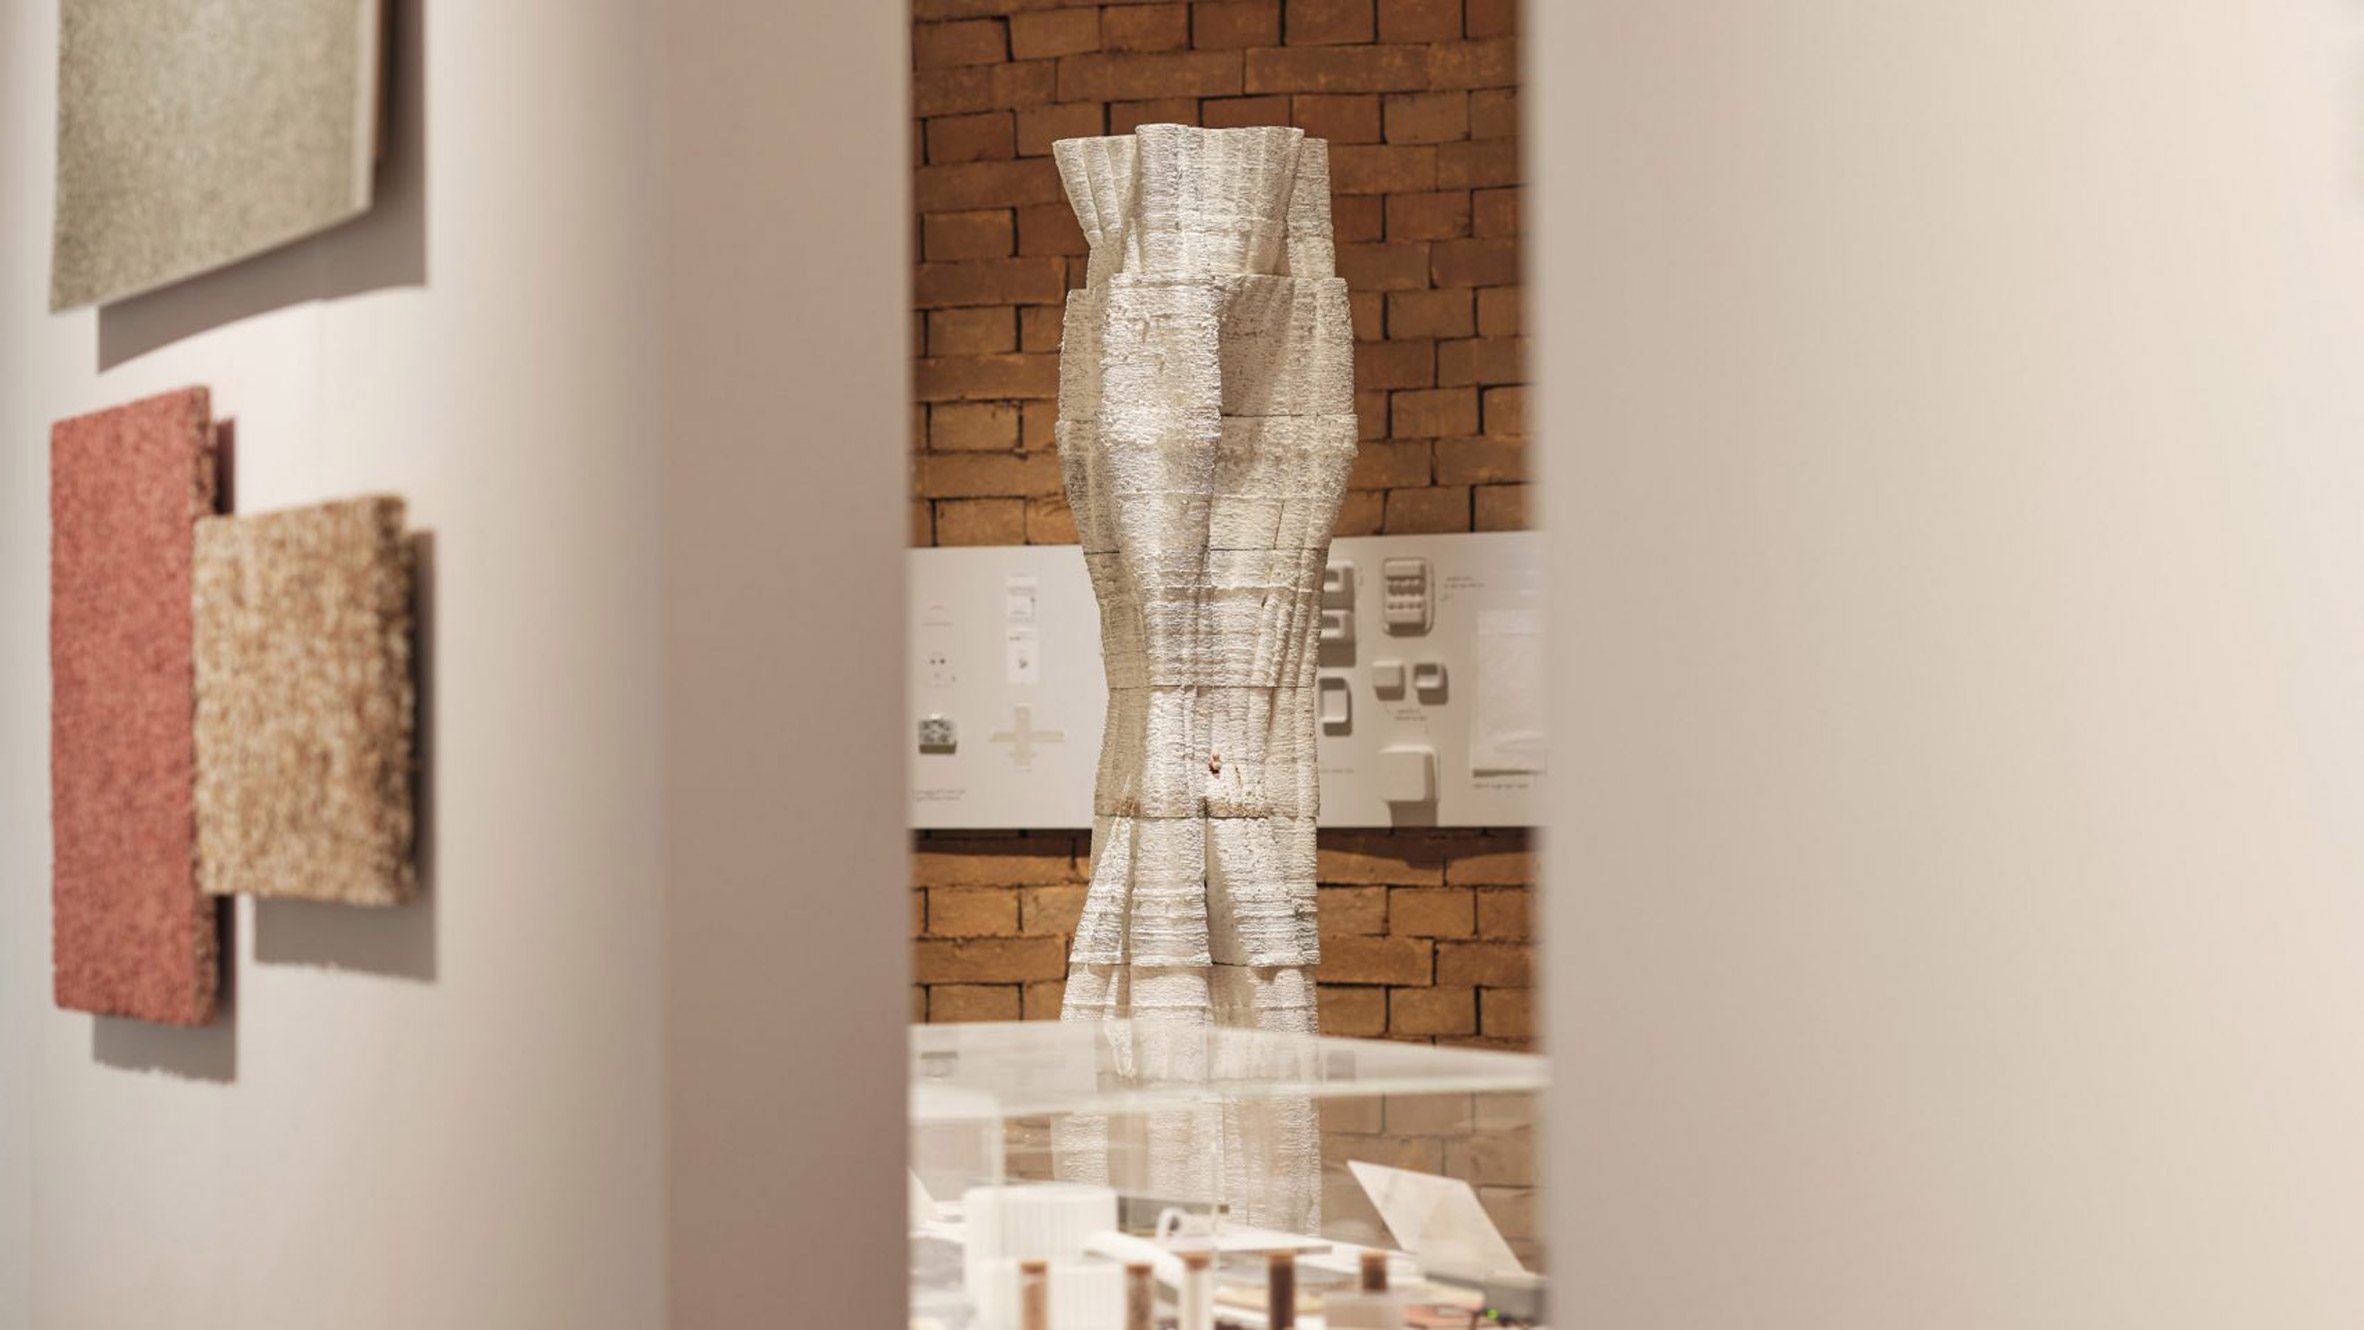 Photo of Blast Studio's Tree Column made of 3D-printed mycelium set within an exhibition